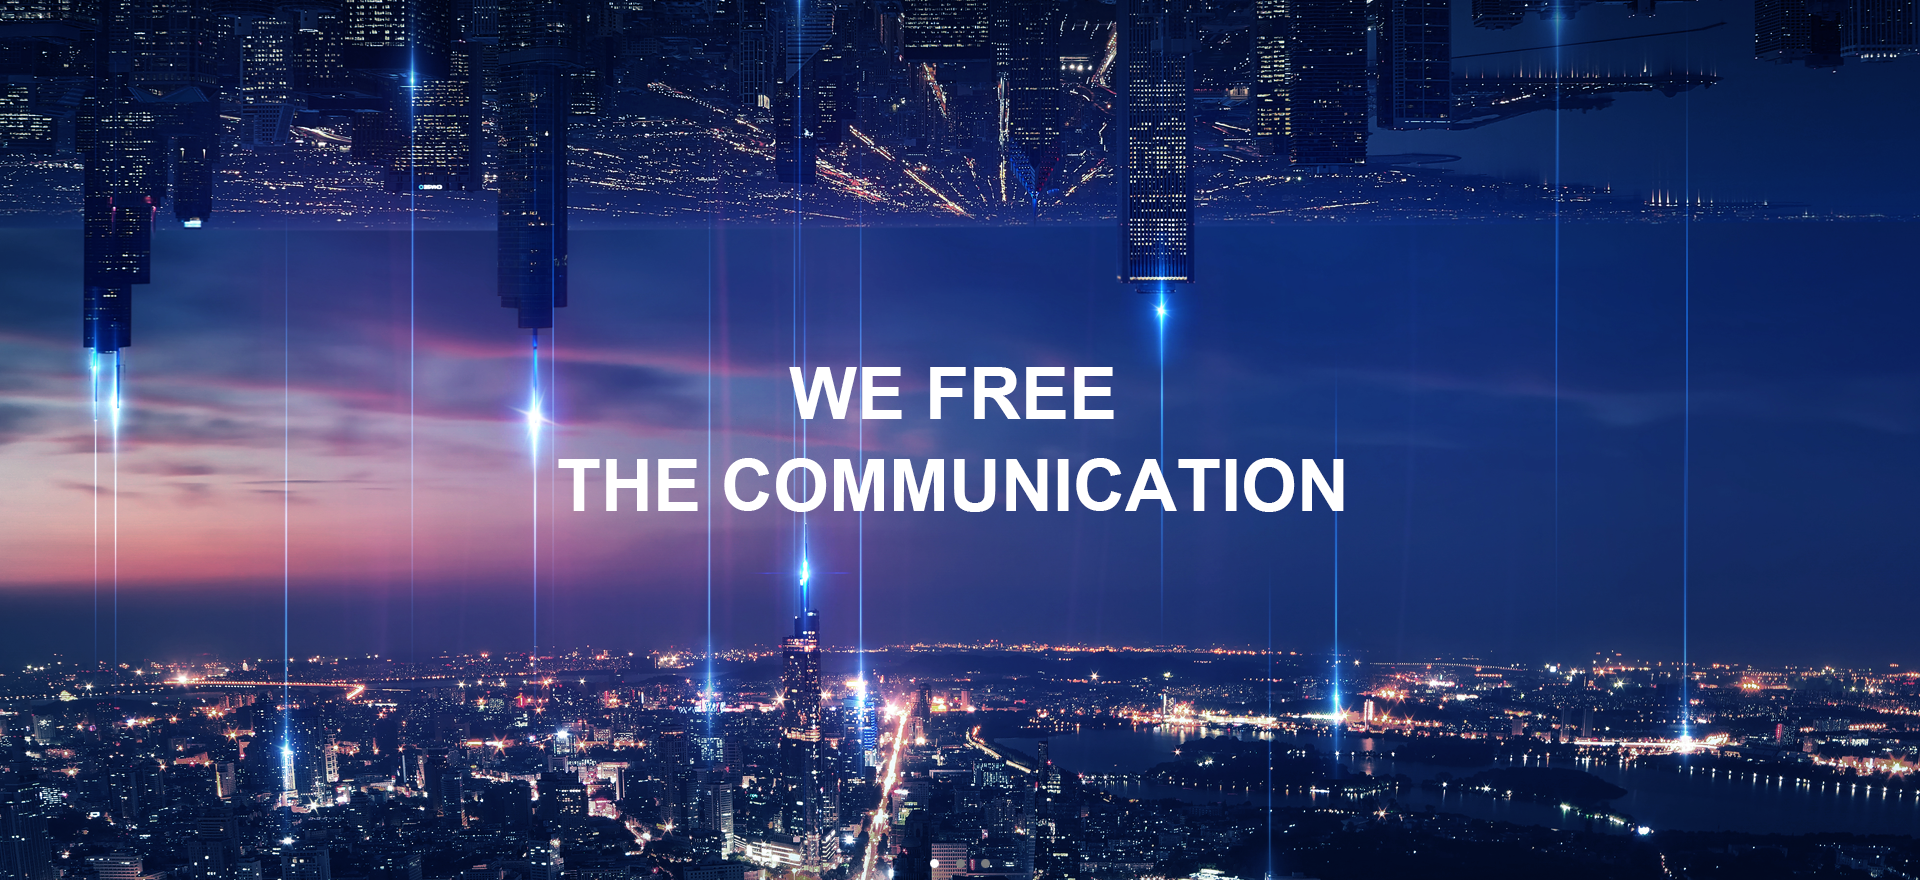 WE FREE THE COMMUNICATION